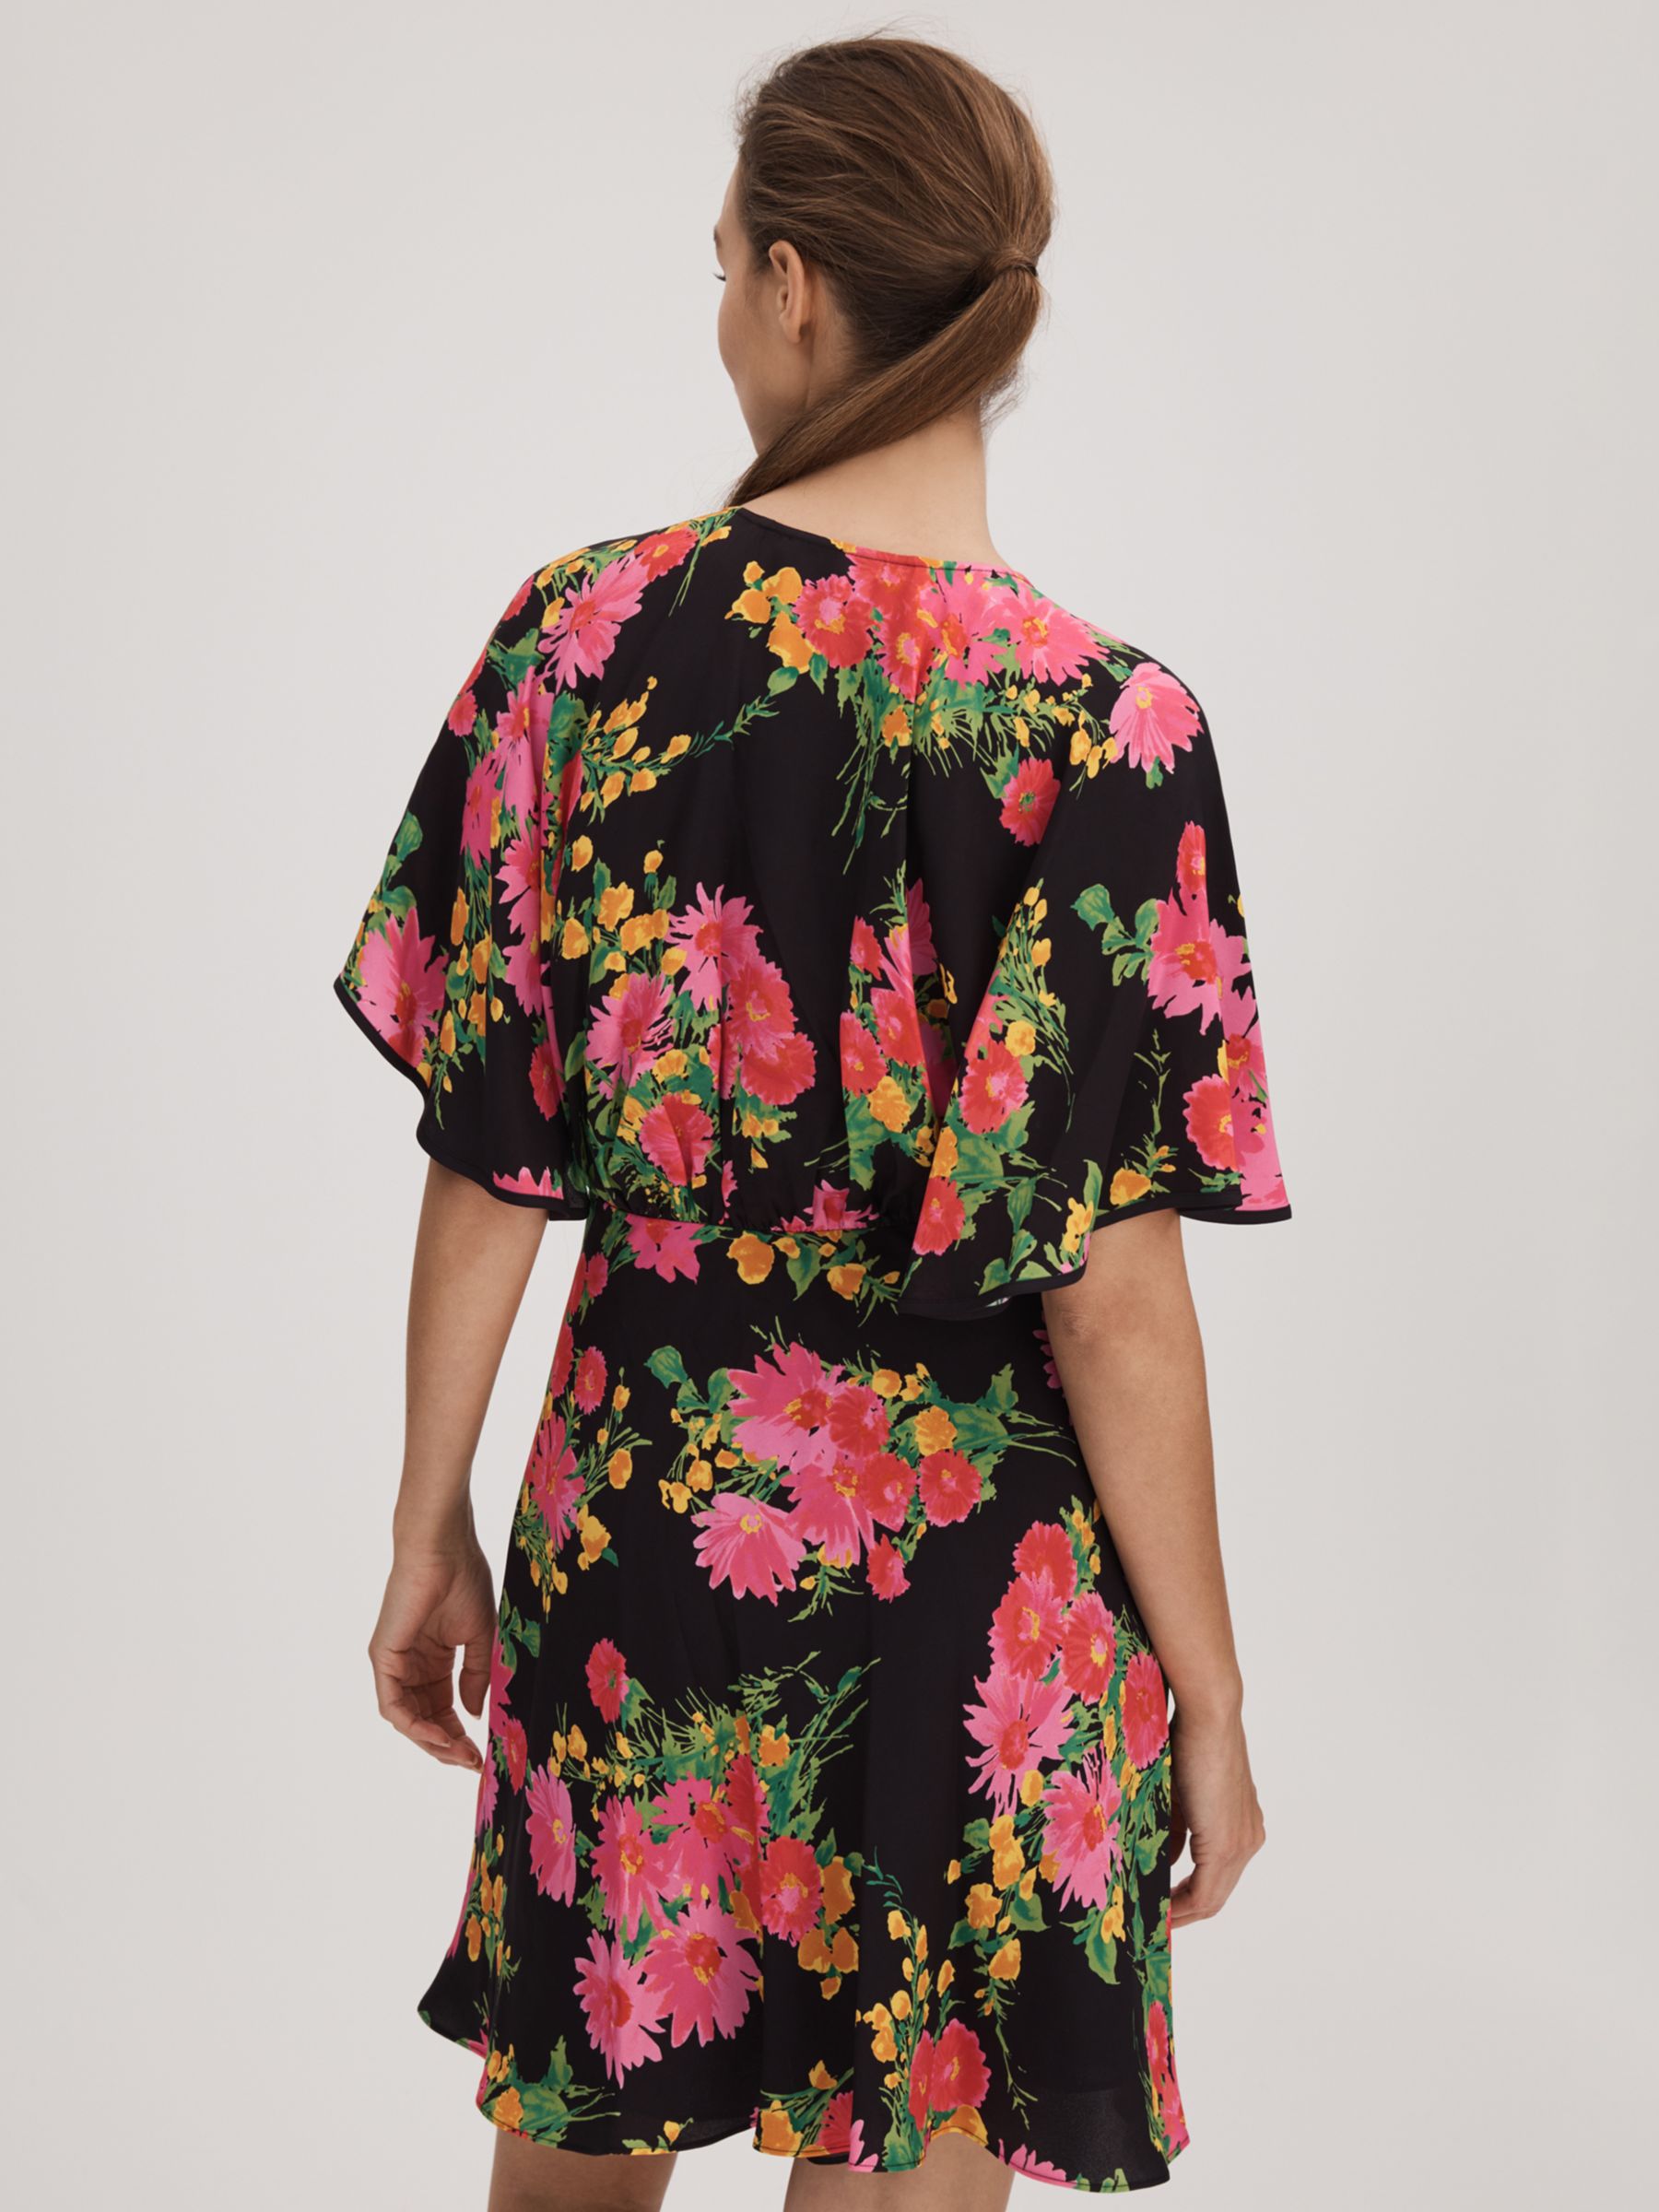 FLORERE Cape Back Detail Floral Print Mini Dress, Black/Multi, 8